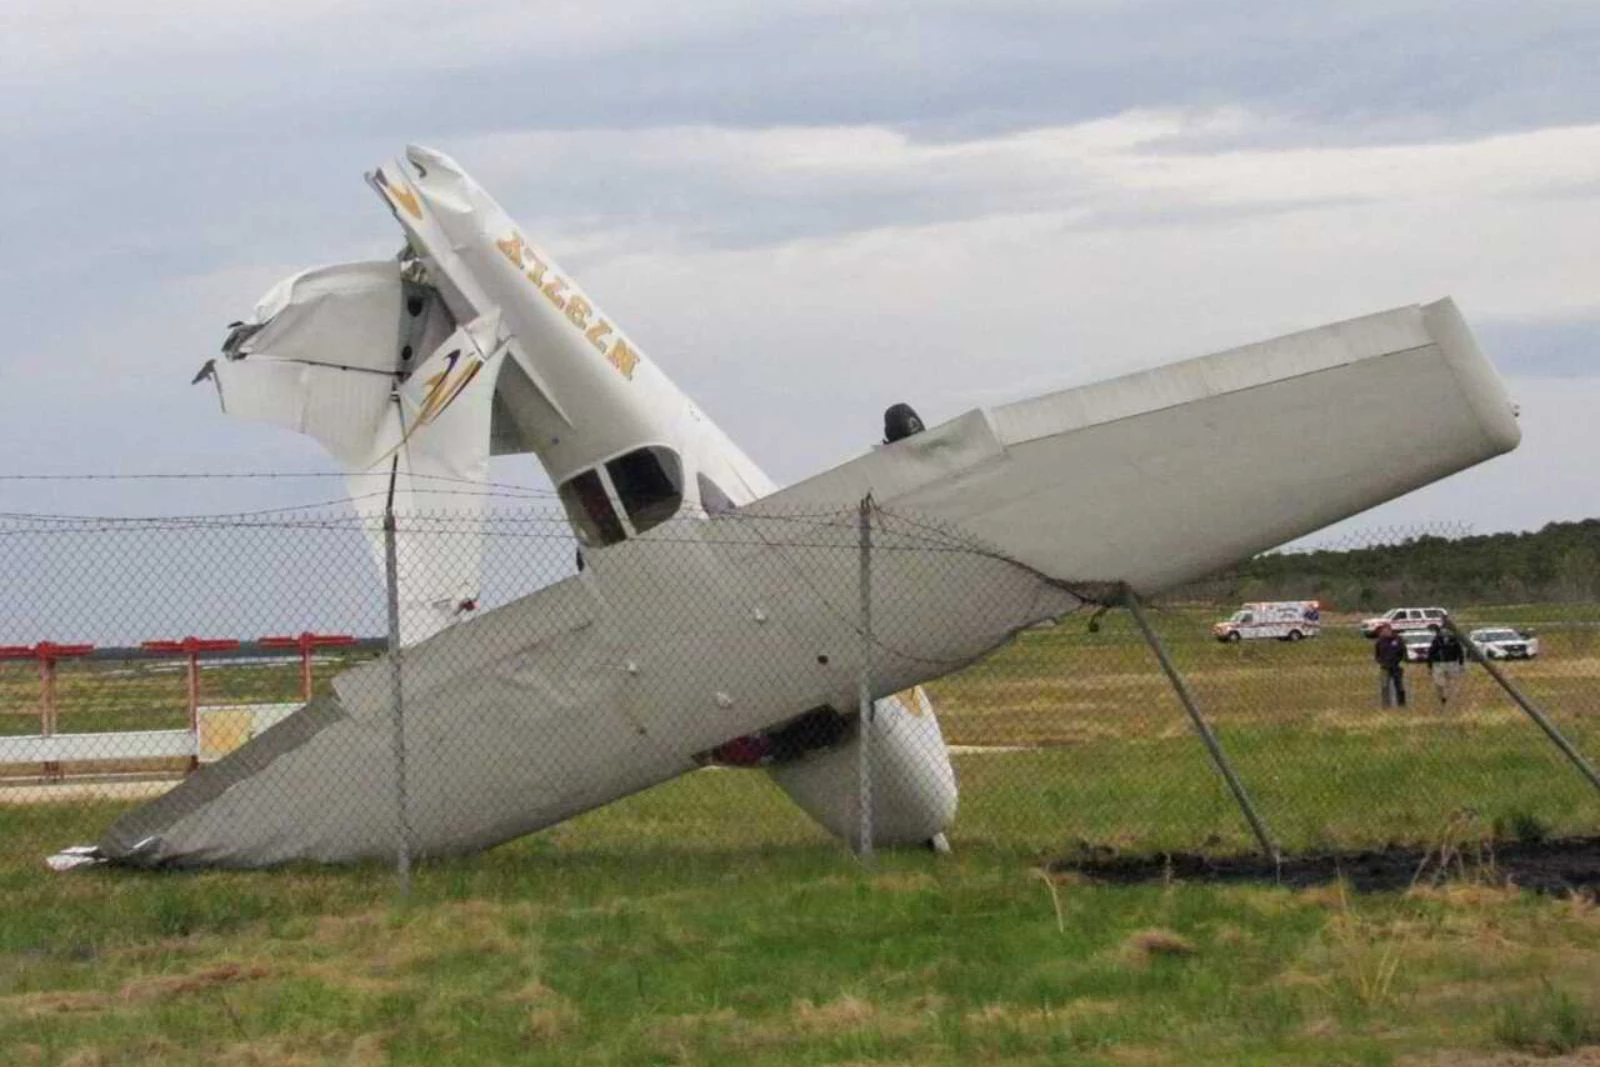 Plane crash at Miller Airpark among biggest news stories of week